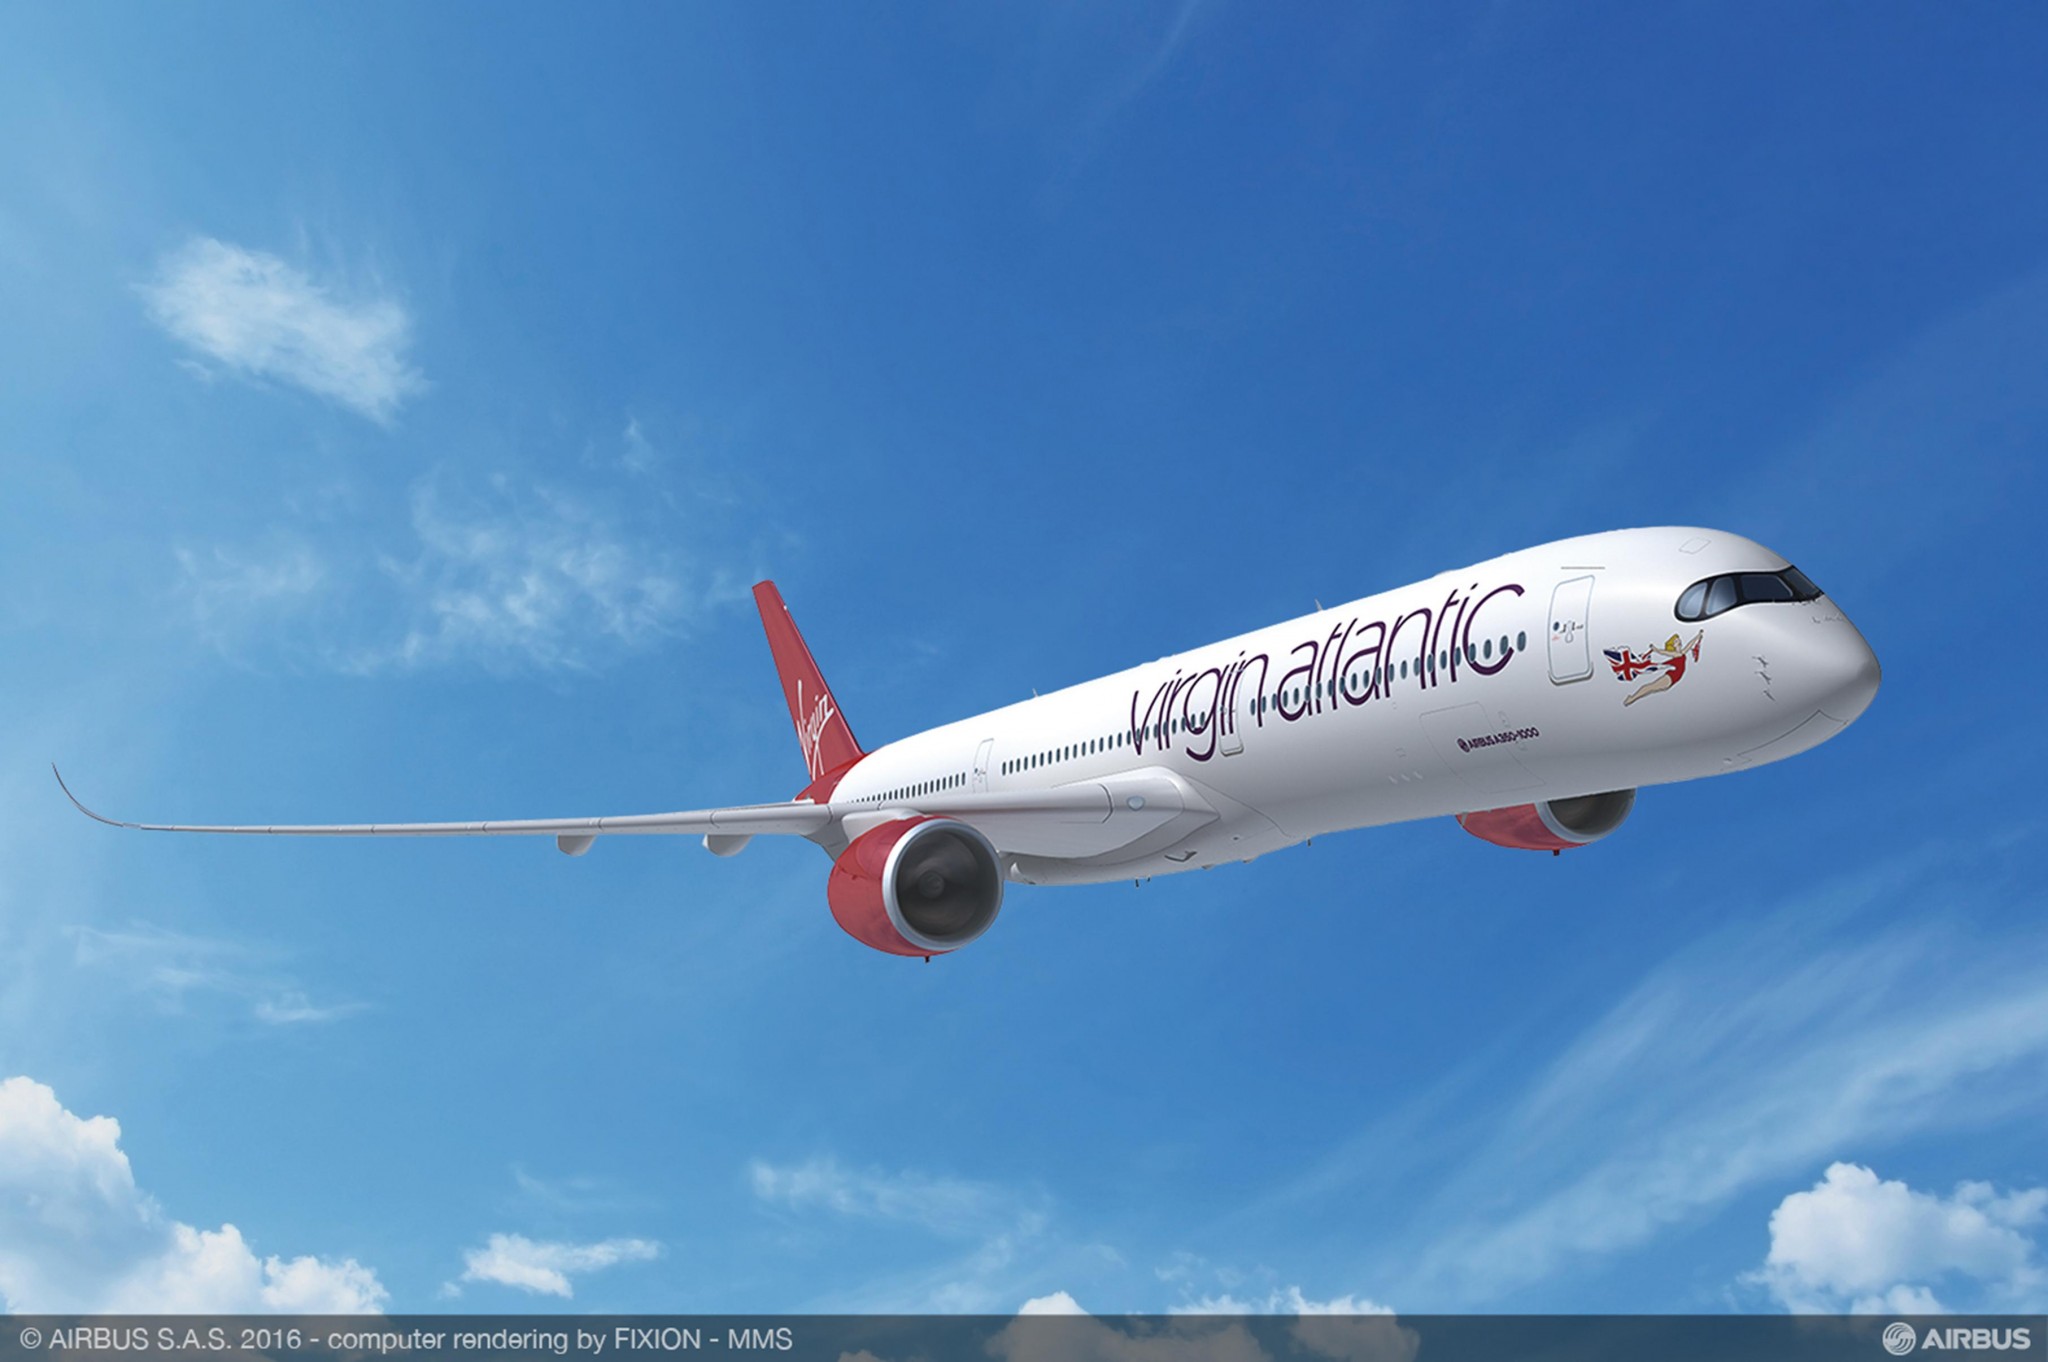 Virgin Atlantic Airways closes $350 million debut revolving credit facility